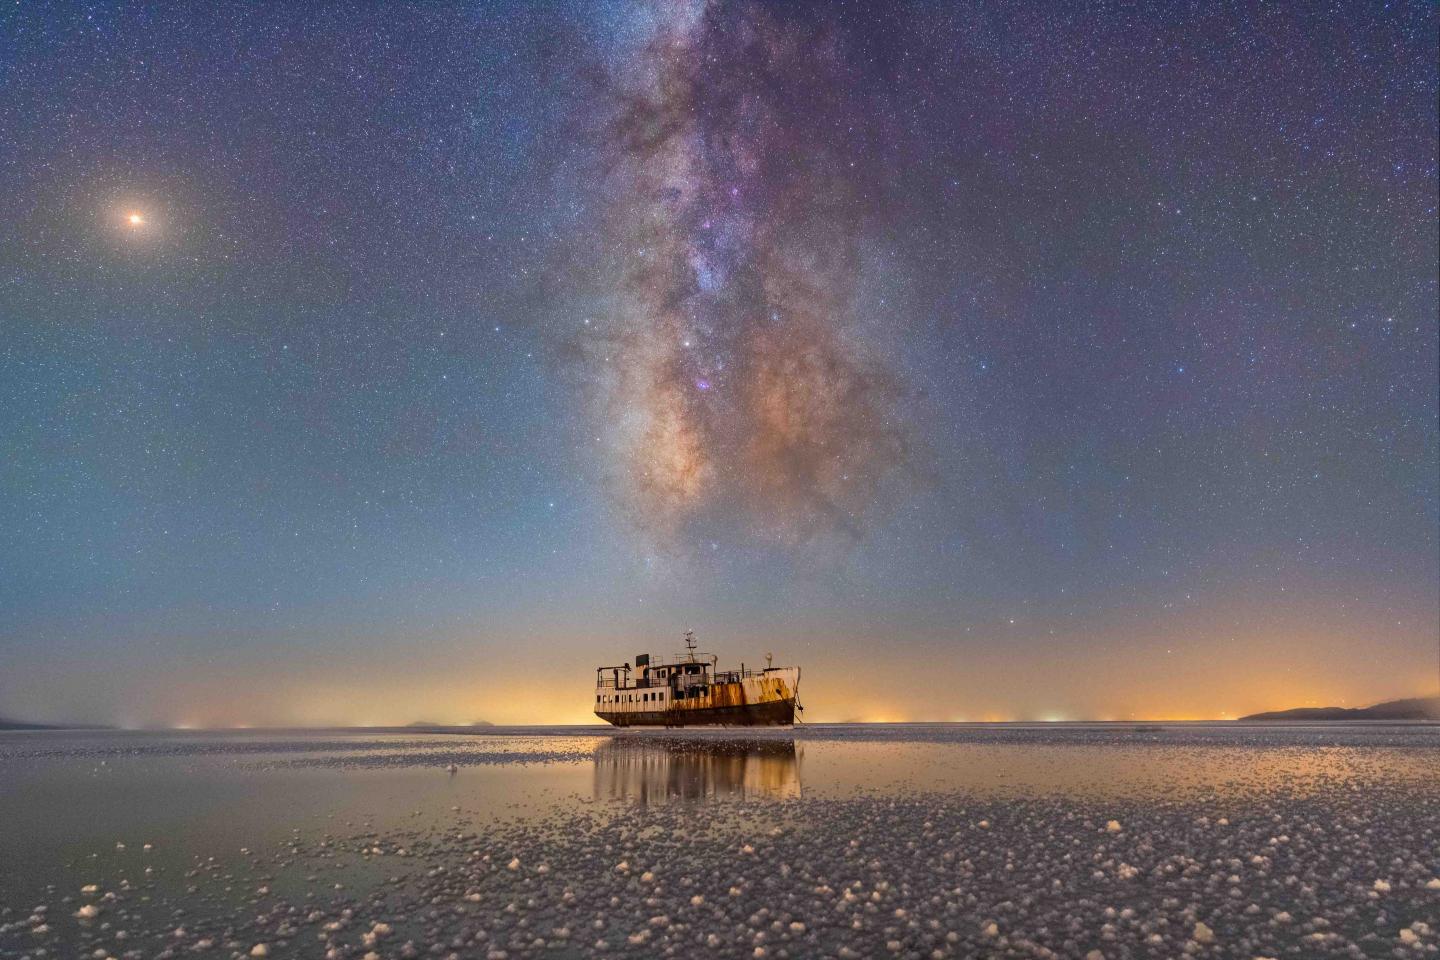 Sharafkhane Port and Lake Urmia © Masoud Ghadiri | Insight Investment Astronomy Photographer of the Year 2019